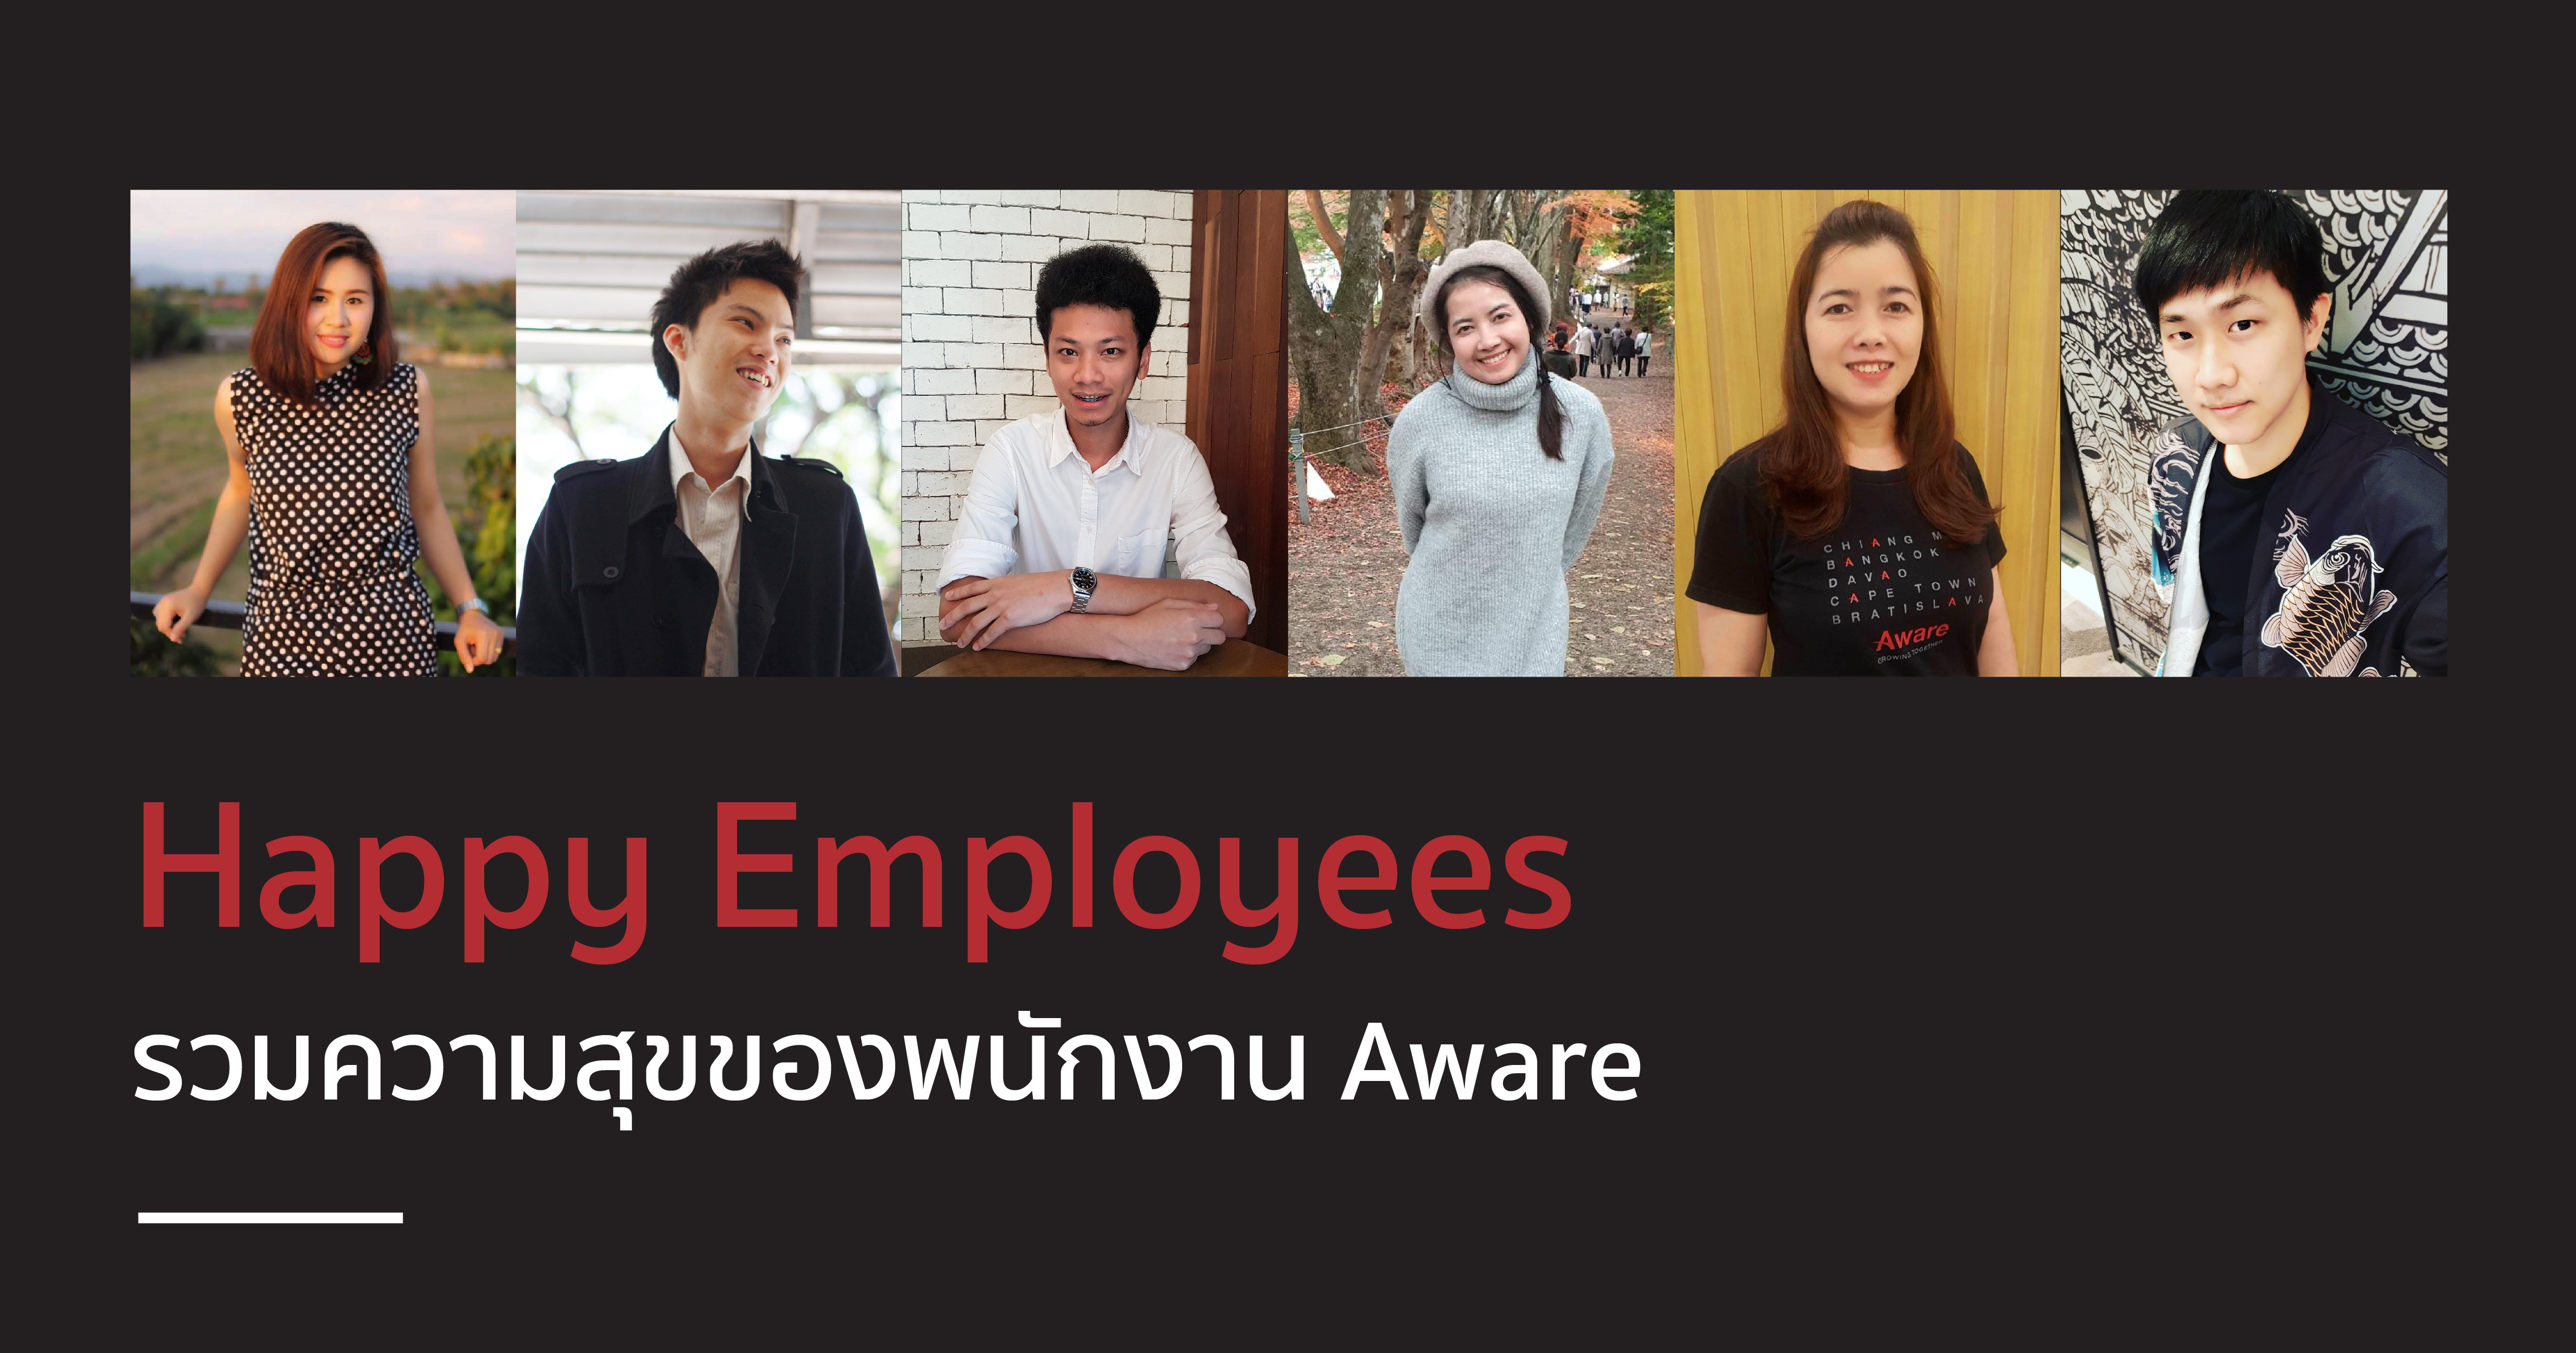 Happy Employees: รวมความสุขของพนักงาน Aware